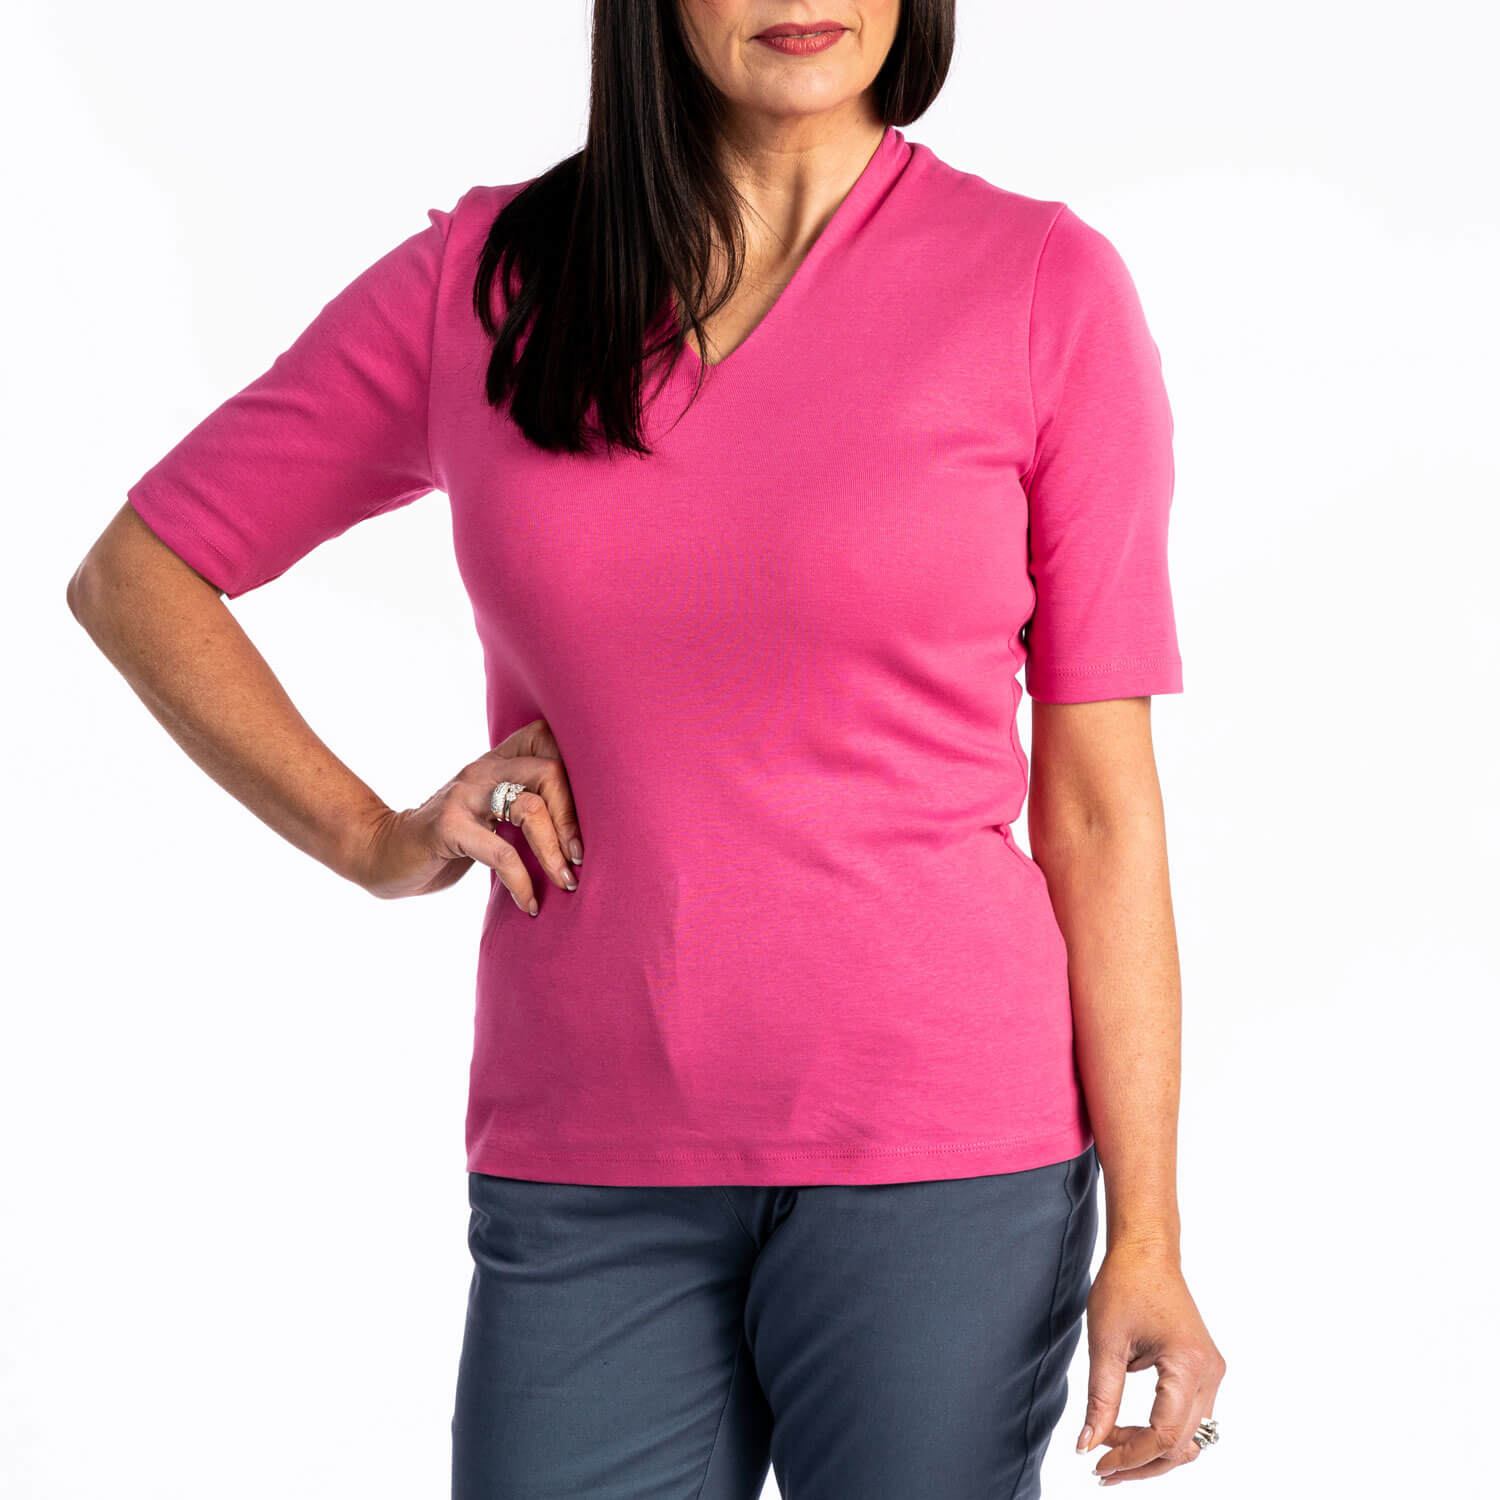 Tea Lane Plain V Neck T-shirt - Pink 1 Shaws Department Stores